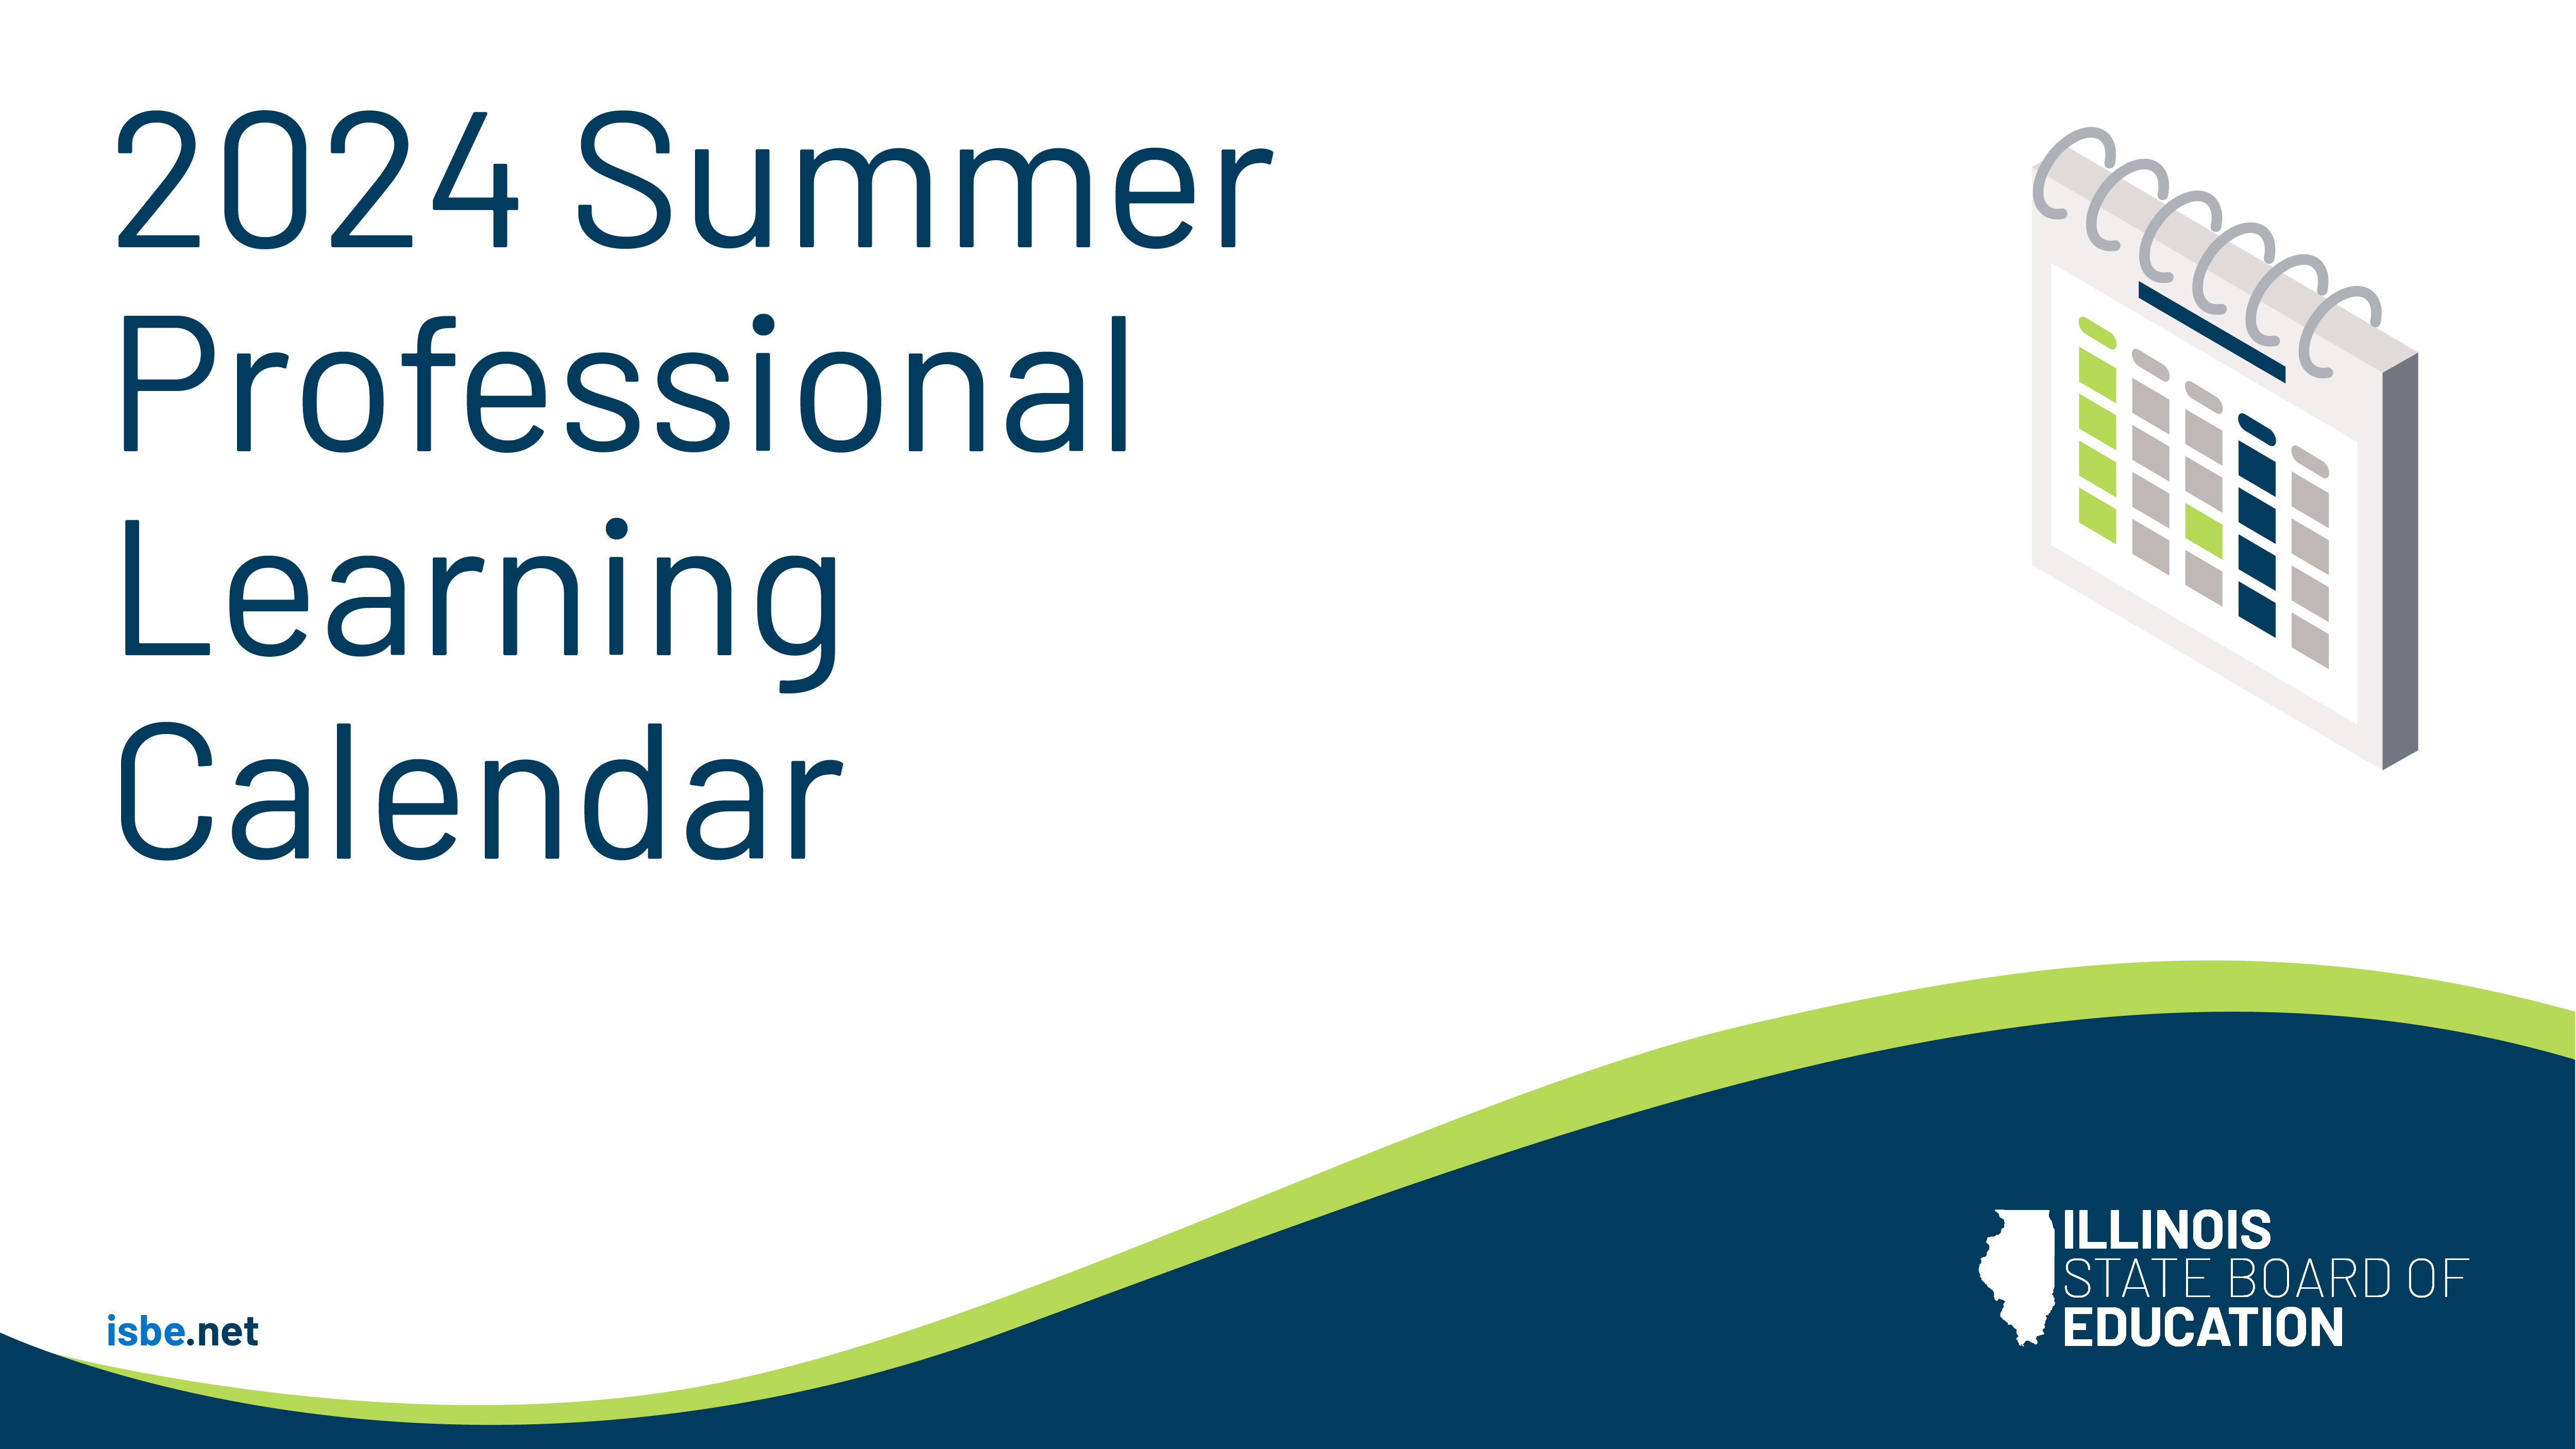 2024 Summer Professional Learning Calendar. Icon of calendar.